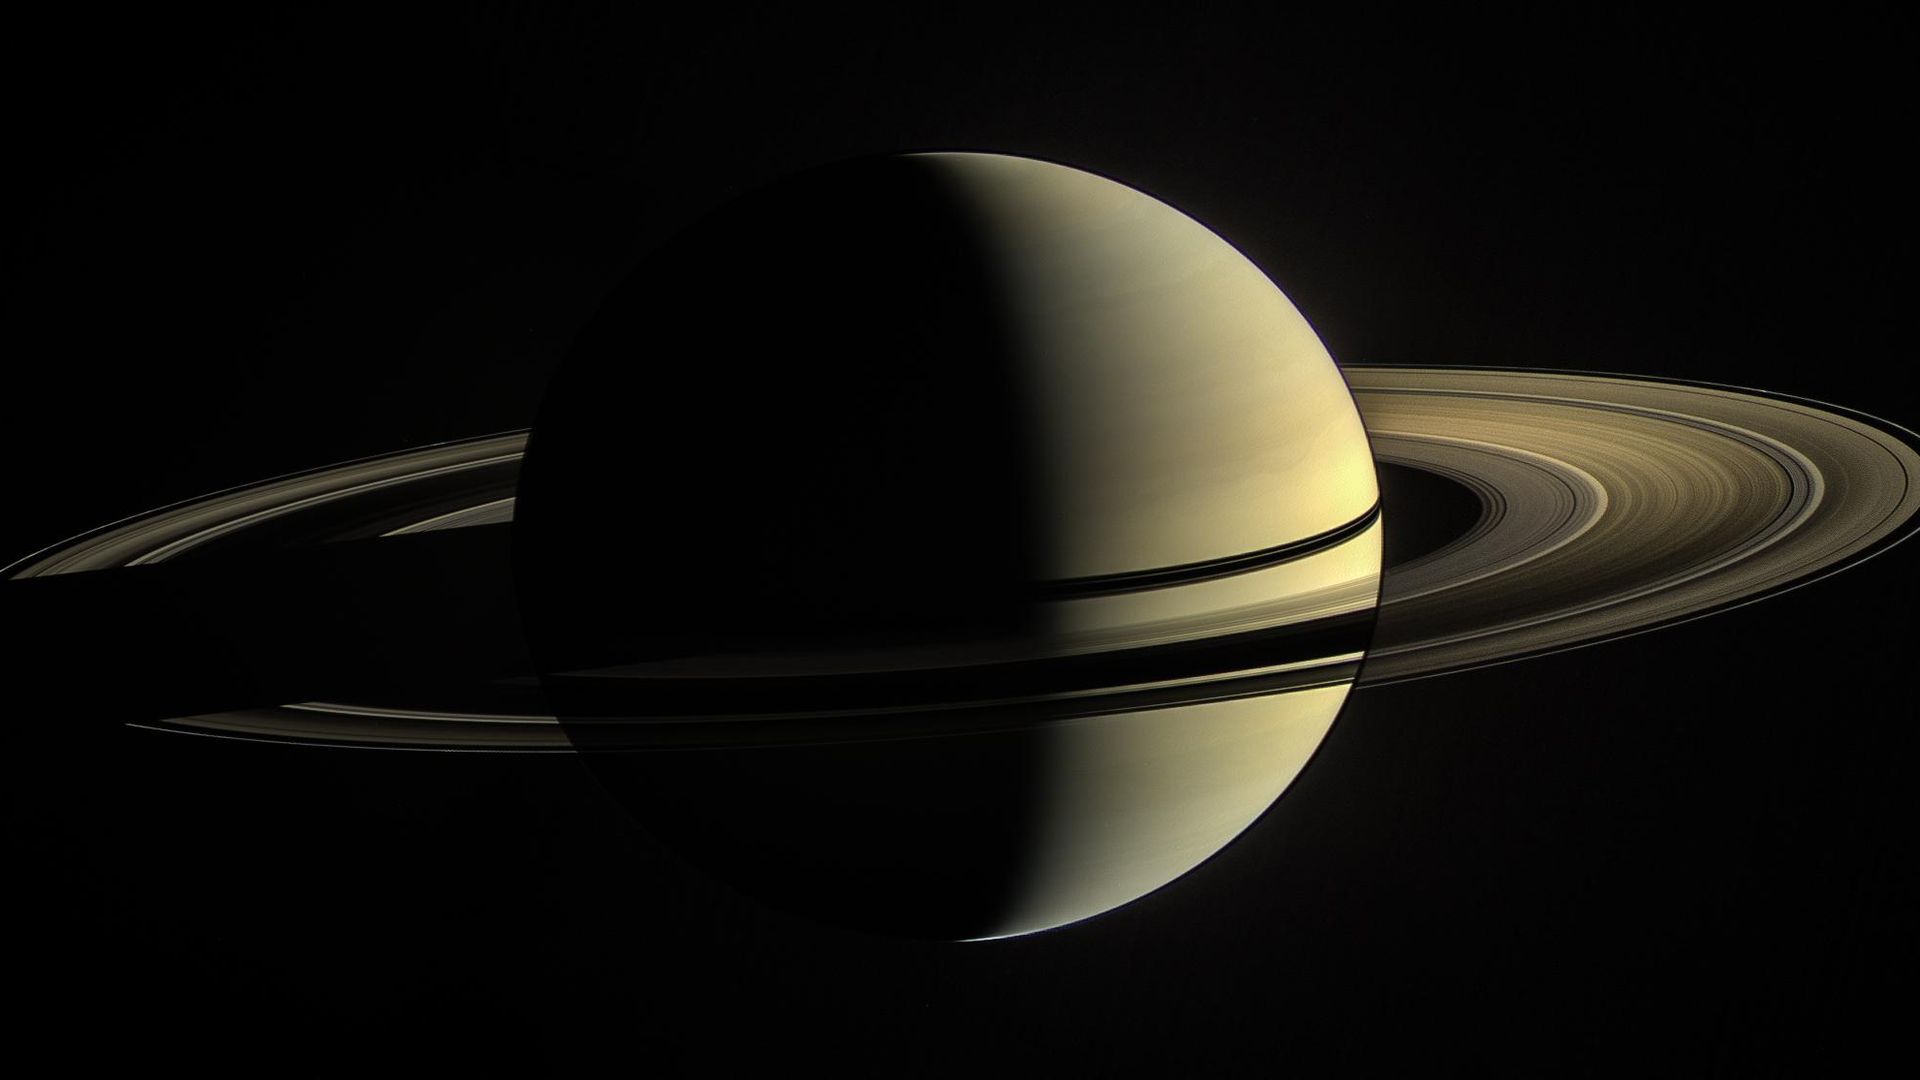 Saturn seen in natural light